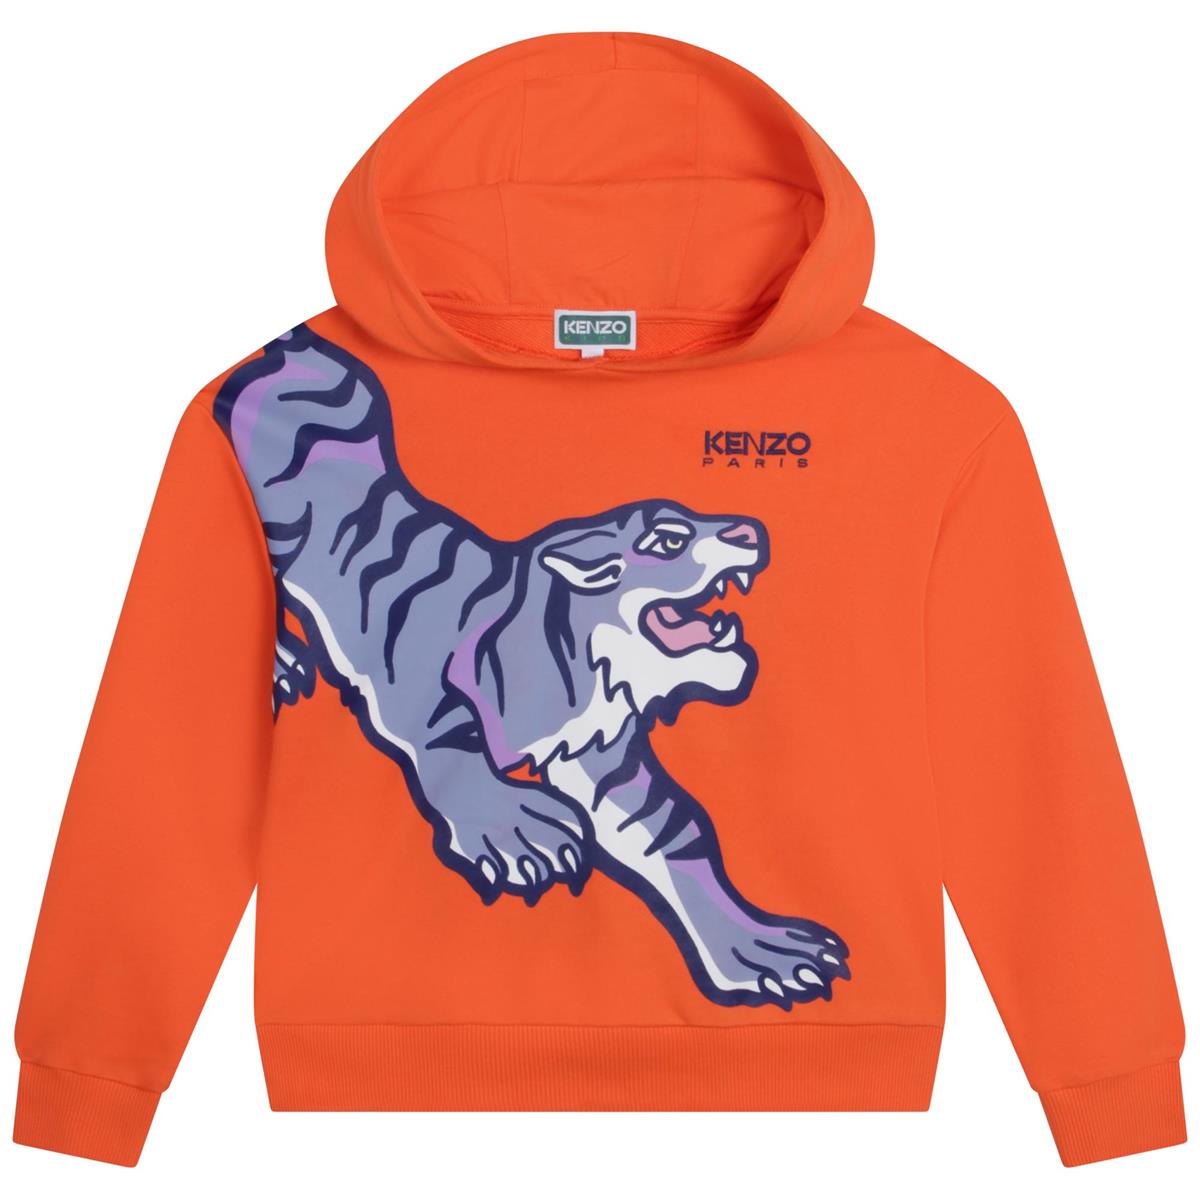 Boys Orange Hooded Sweatshirt